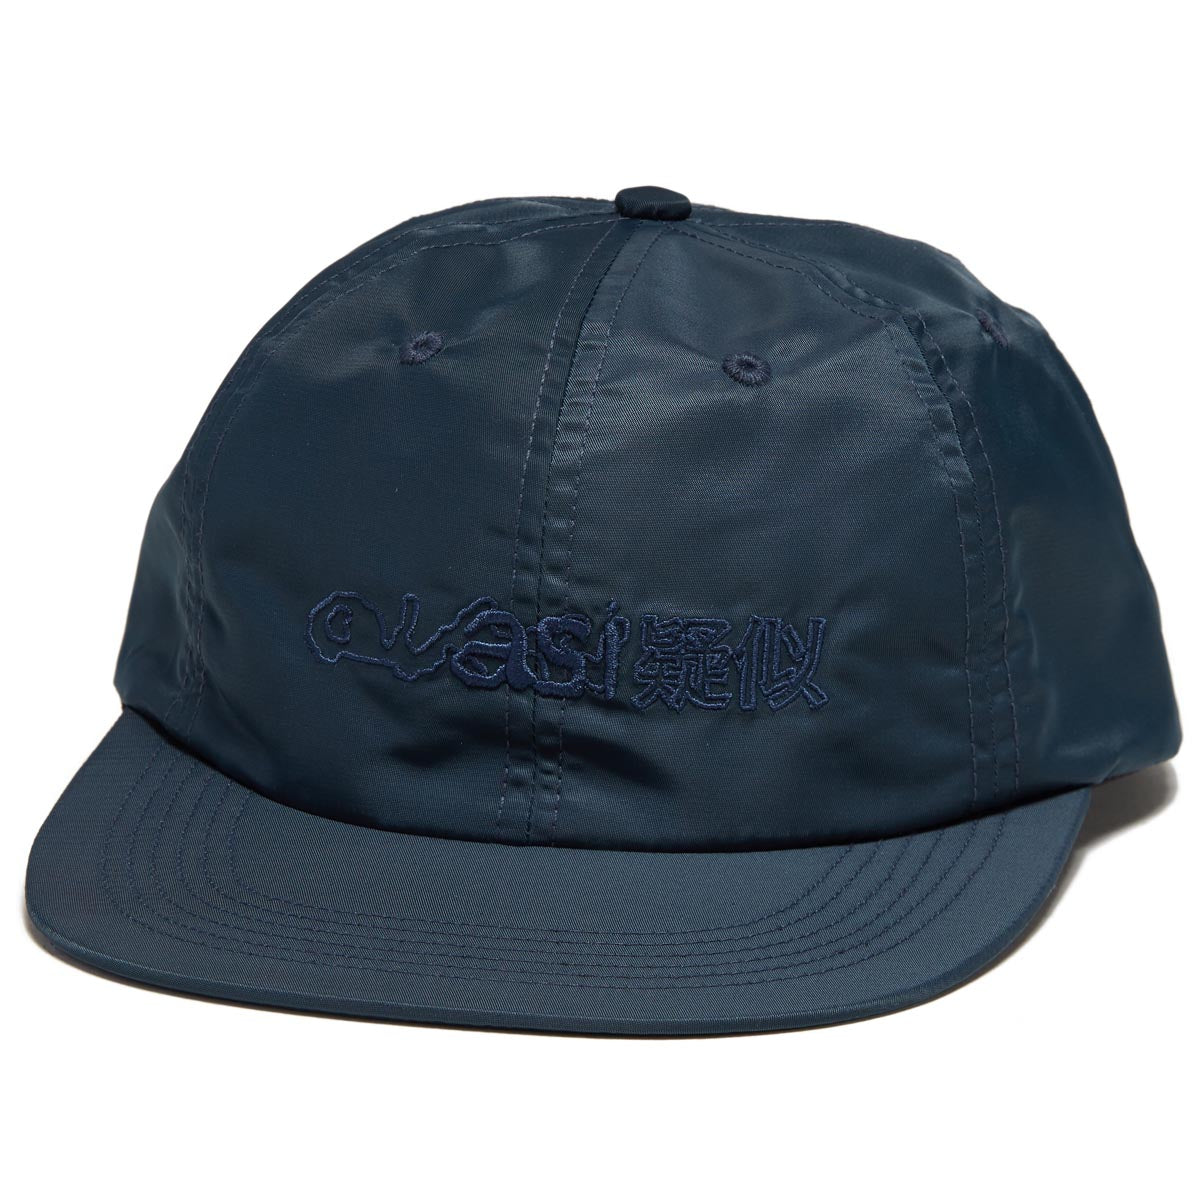 Quasi Slang Hat - Navy image 1